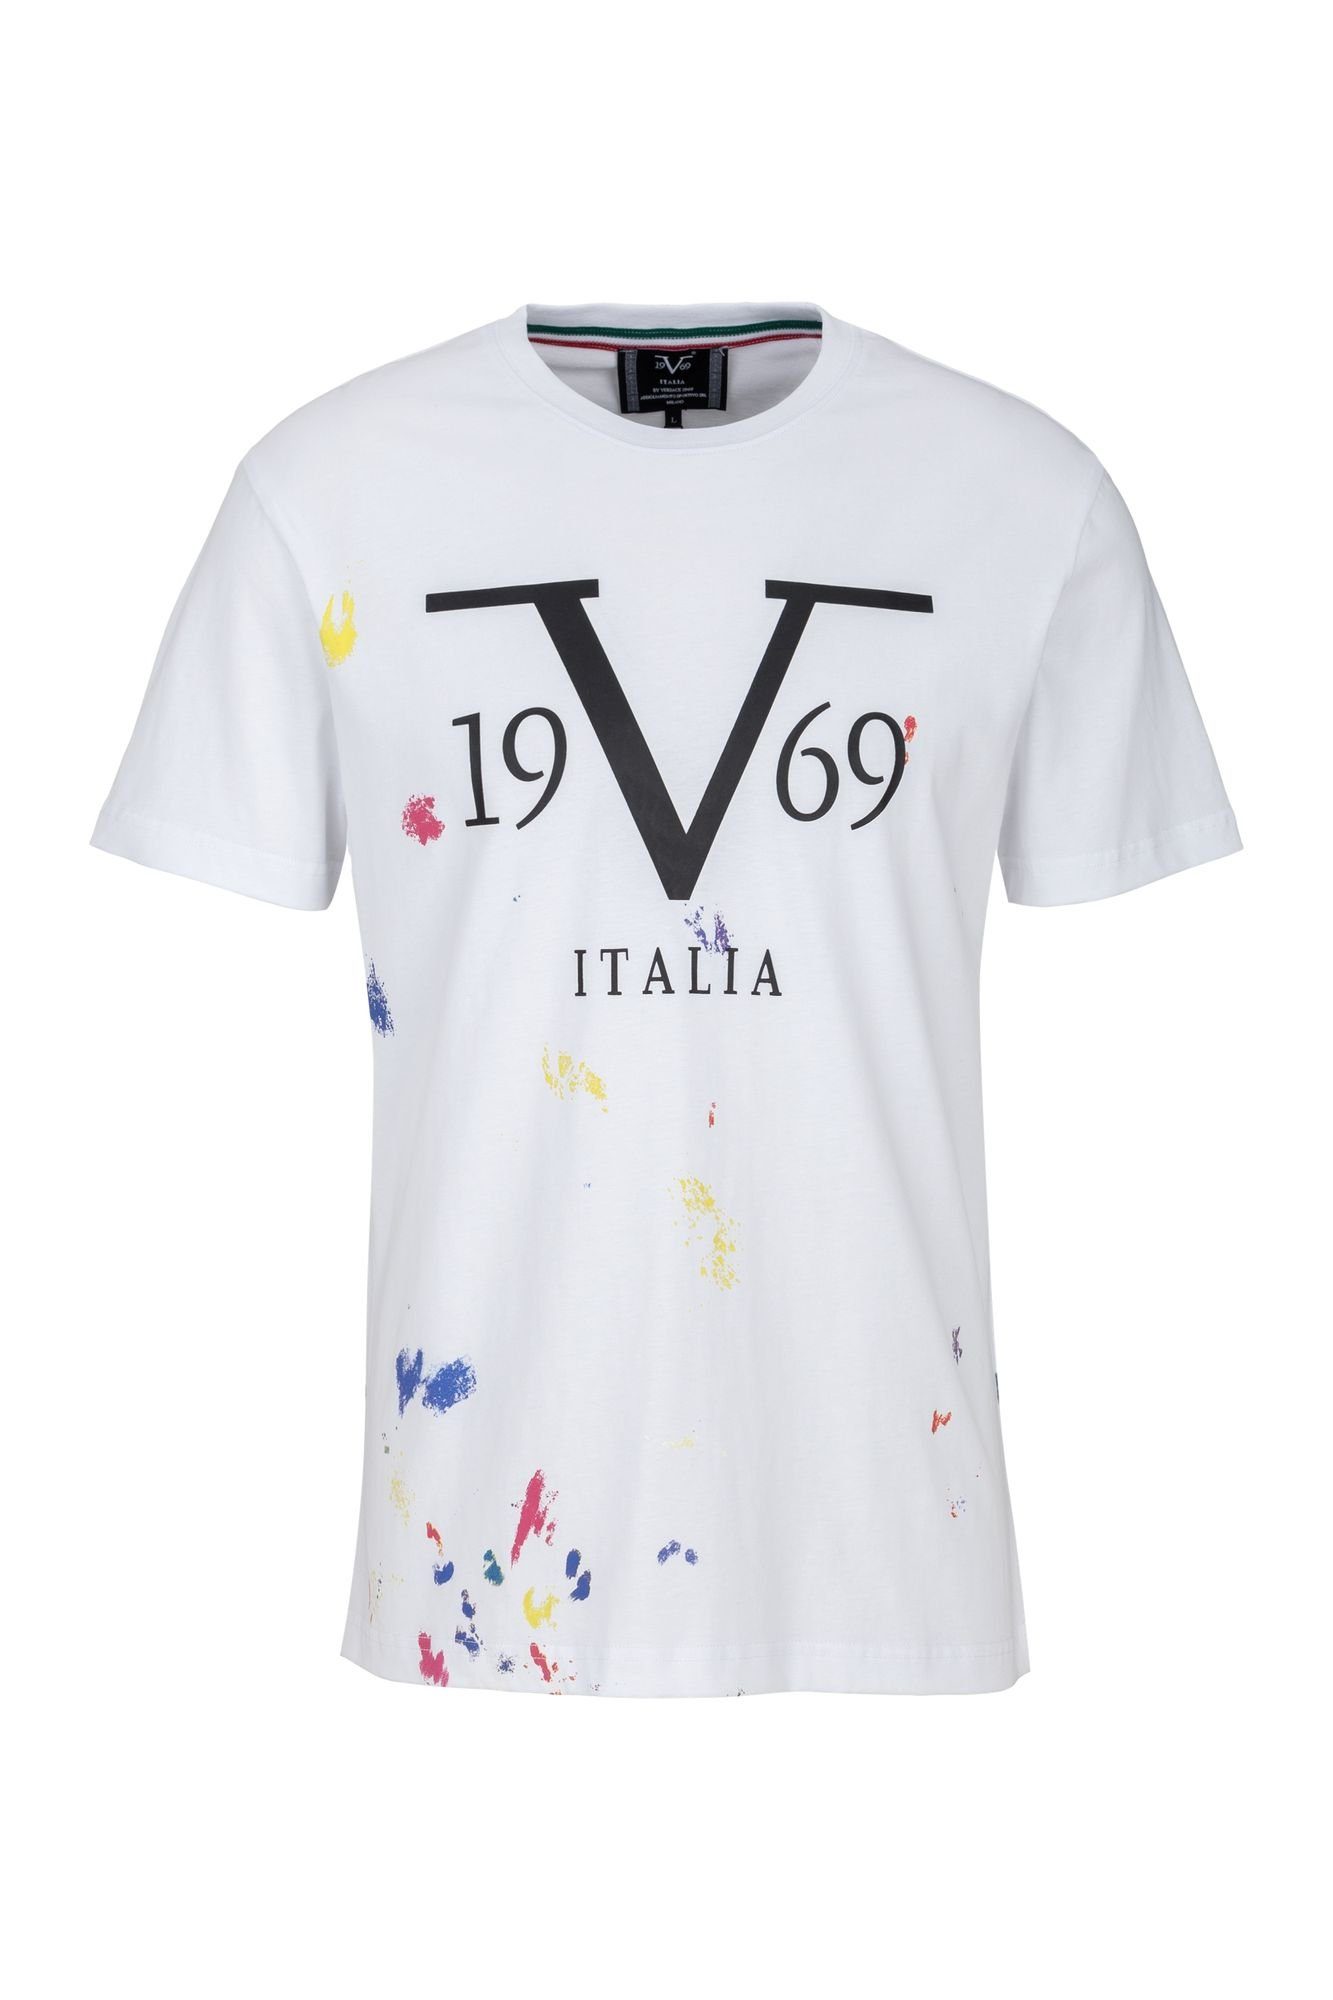 19V69 Italia by Versace Leonardo by Sportivo SRL Versace Rundhalsshirt 